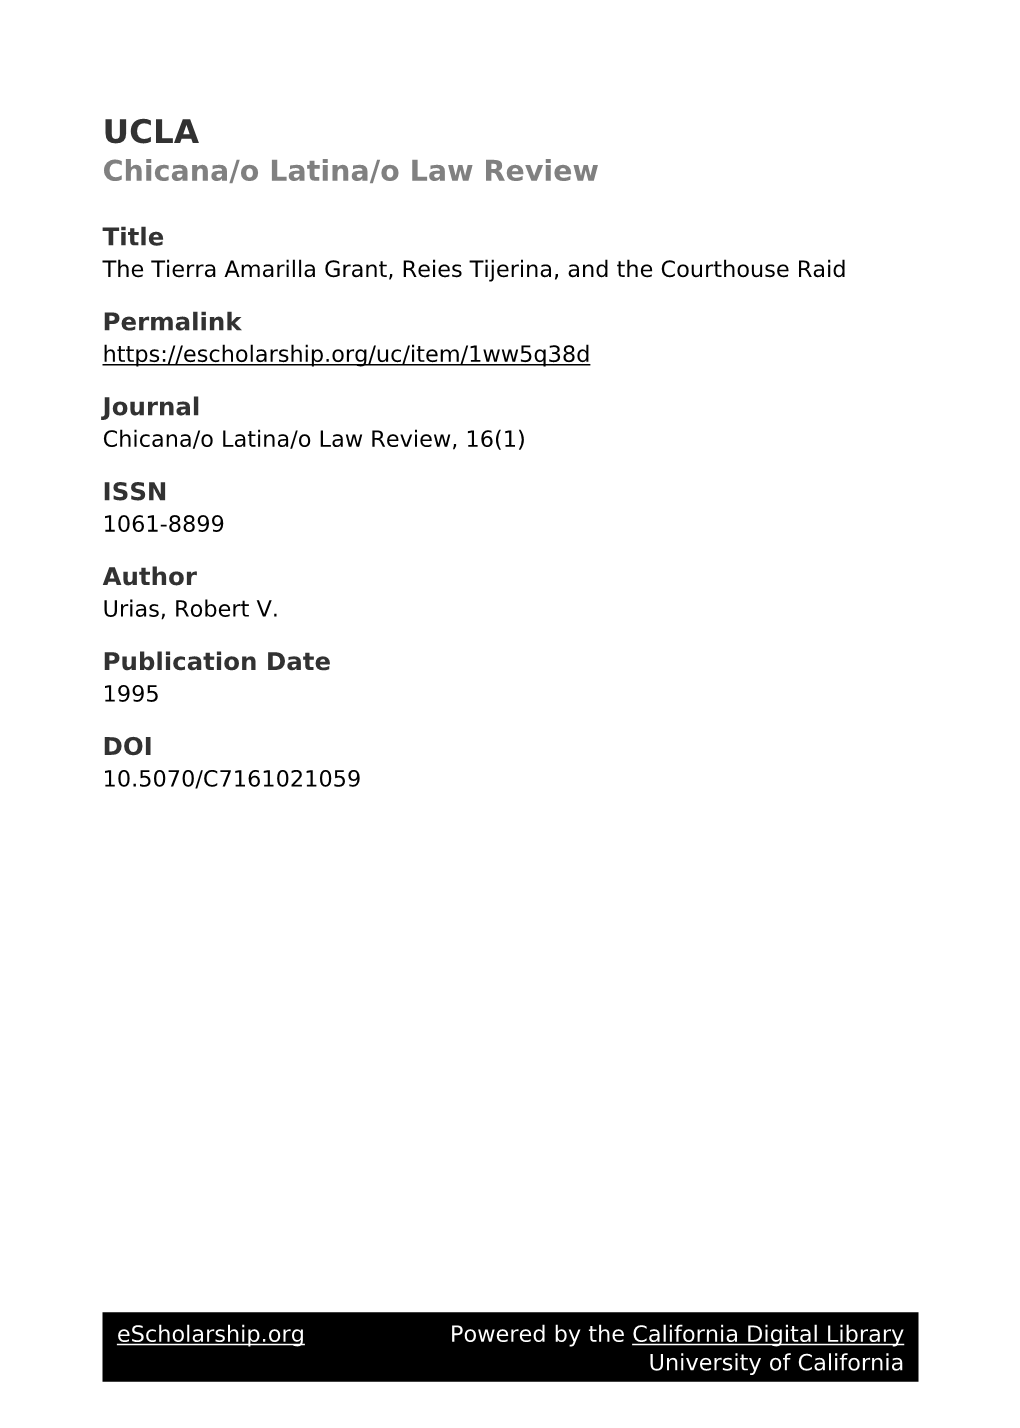 Tierra Amarilla Grant, Reies Tijerina, and the Courthouse Raid